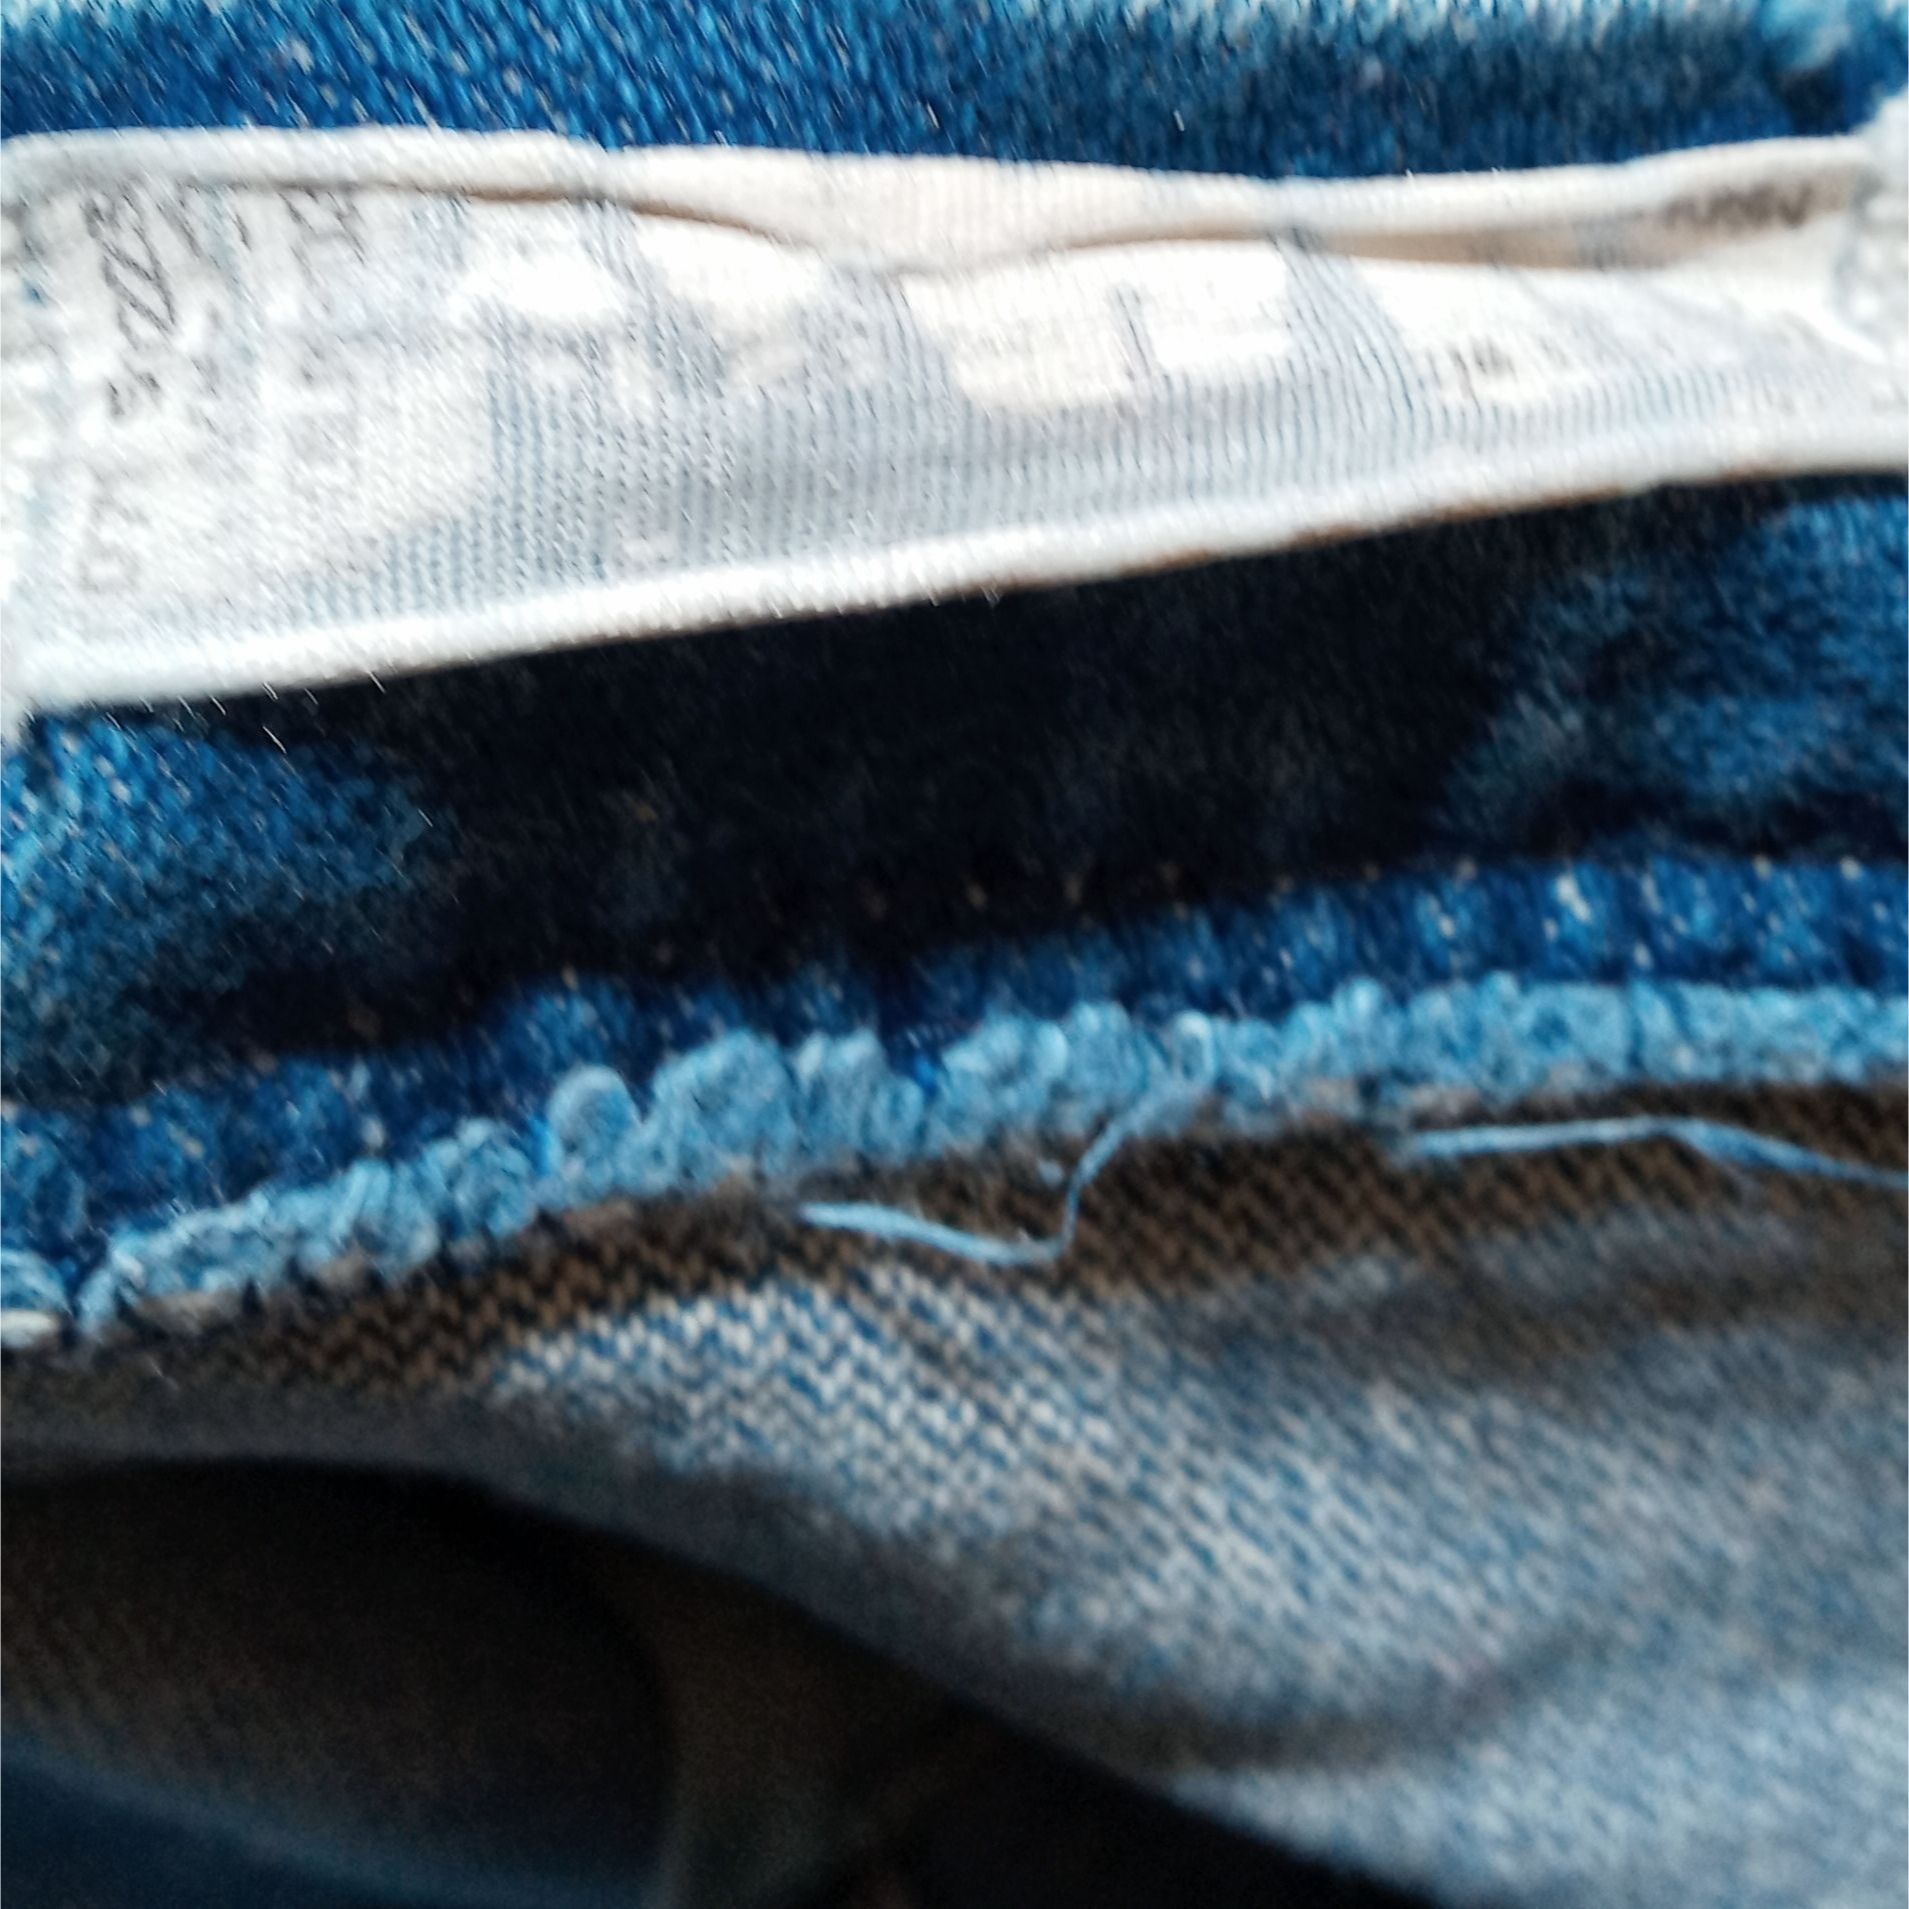 Wrangler Vintage Wrangler Mens Blue Jeans 37 x 28 Faded Worn Denim Co Size US 37 - 4 Thumbnail